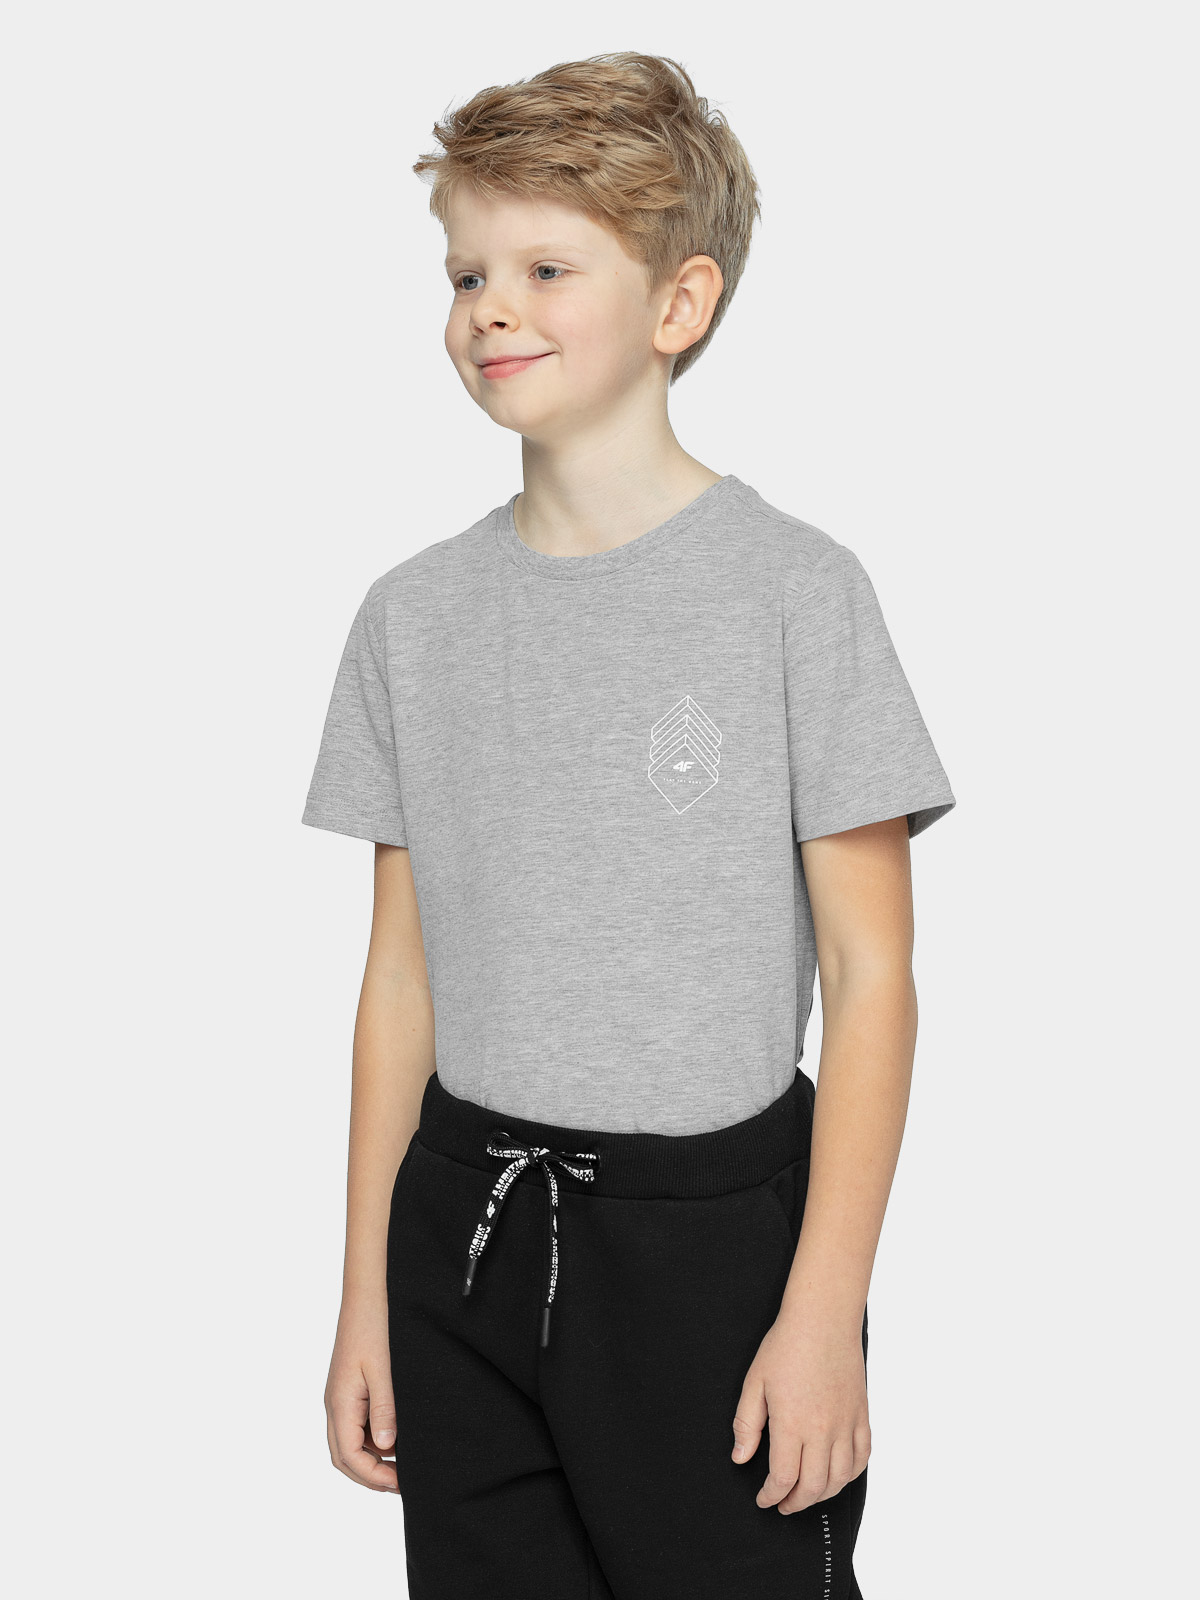 фото Футболка 4f boy's t-shirts hjz21-jtsm007-23m цв.серый р. 164